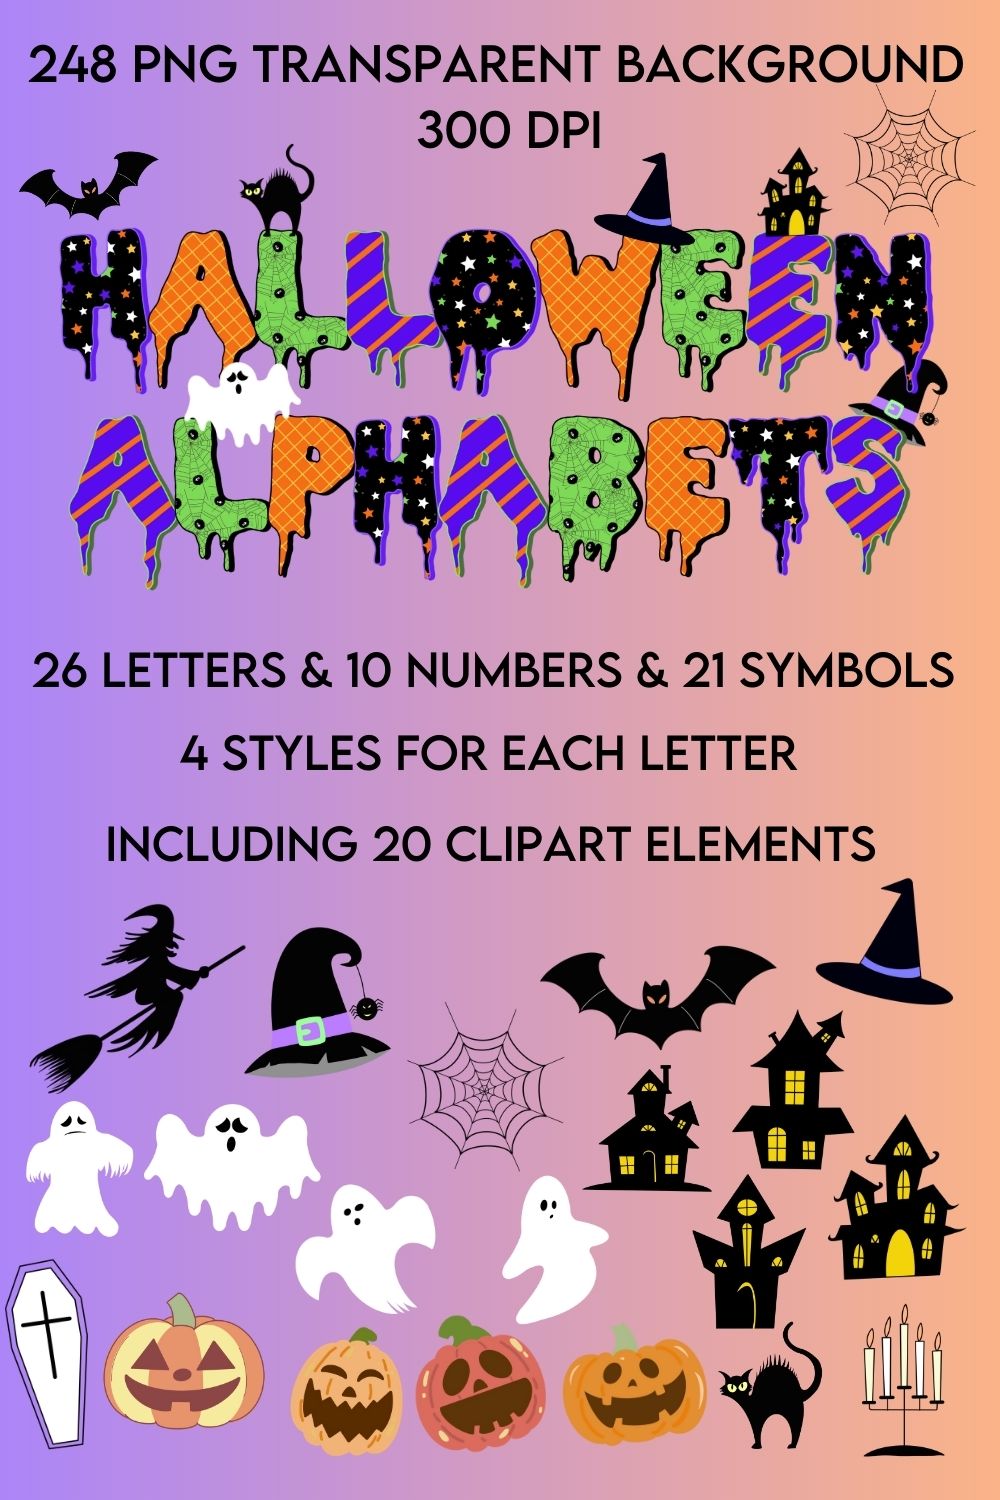 Halloween Alphabets 248 PNG Transparent Background pinterest preview image.